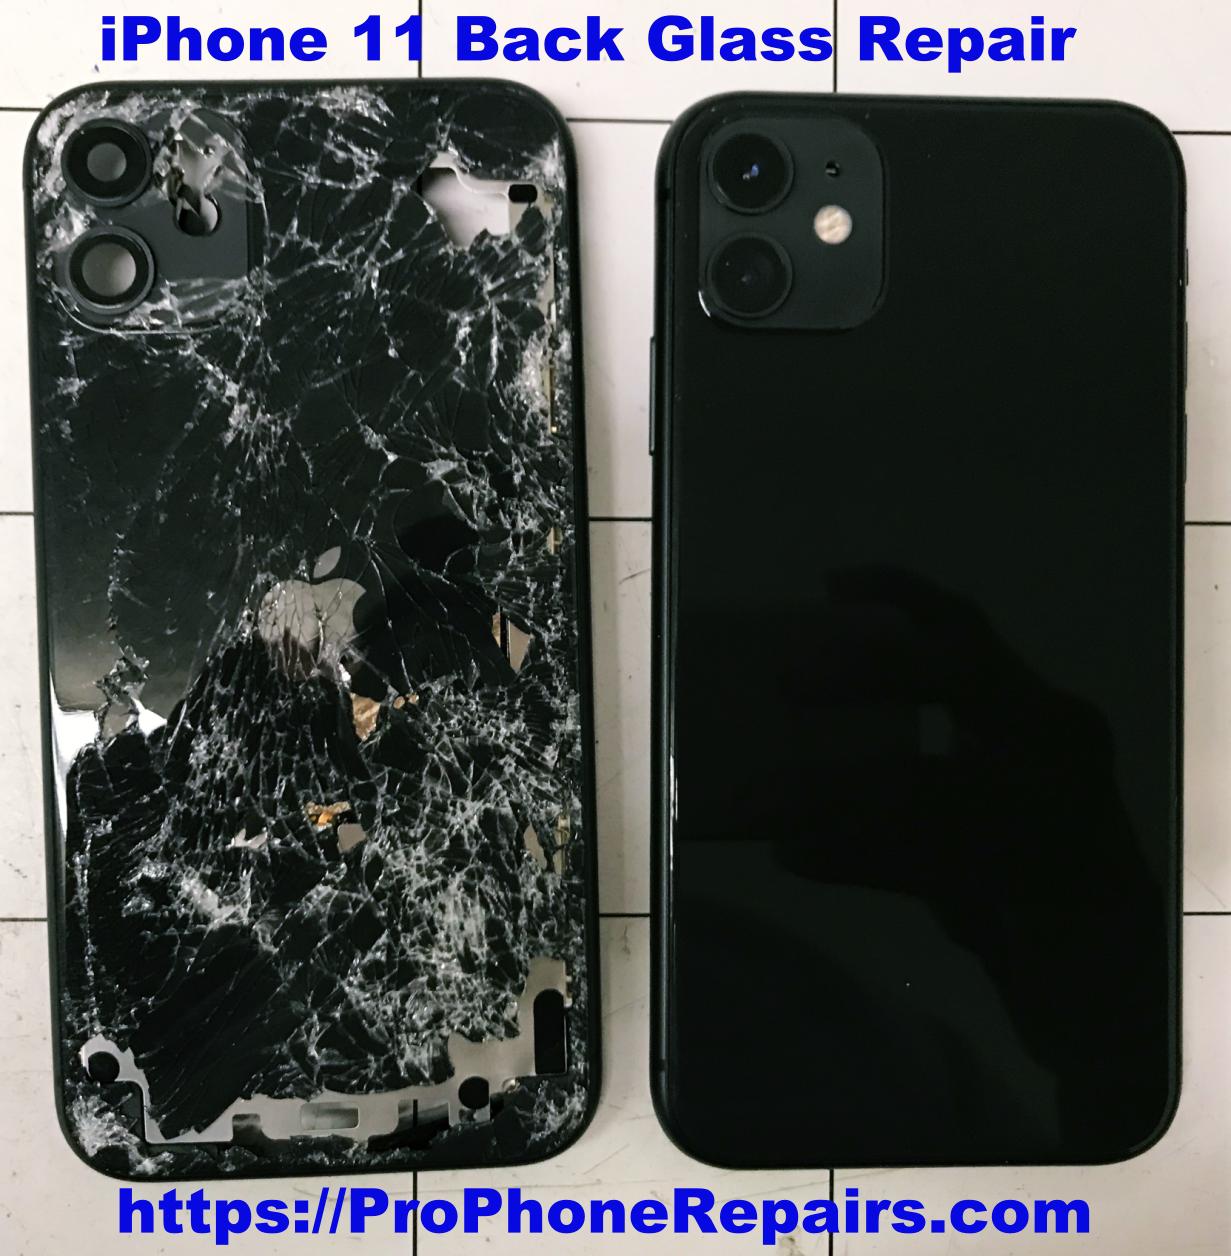 iPhone 11 back glass repair by Pro Phone Repairs of Albuquerque